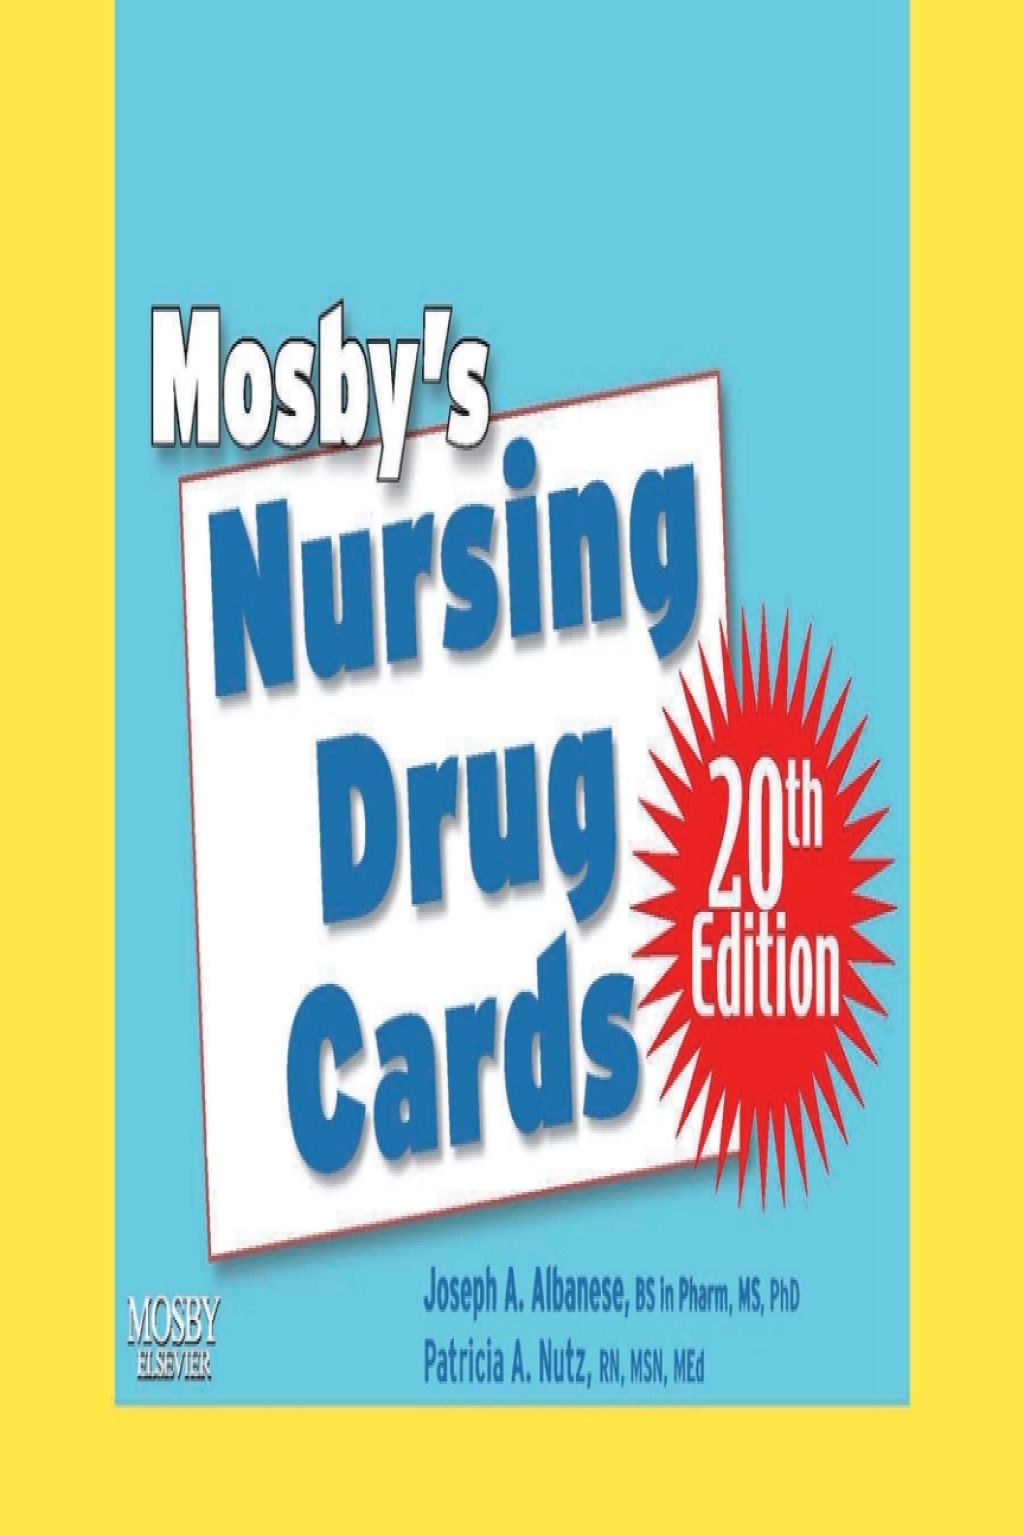 Mosby's Nursing Drug Cards E-Book (eBook) - Mosby; Patricia A. Nutz